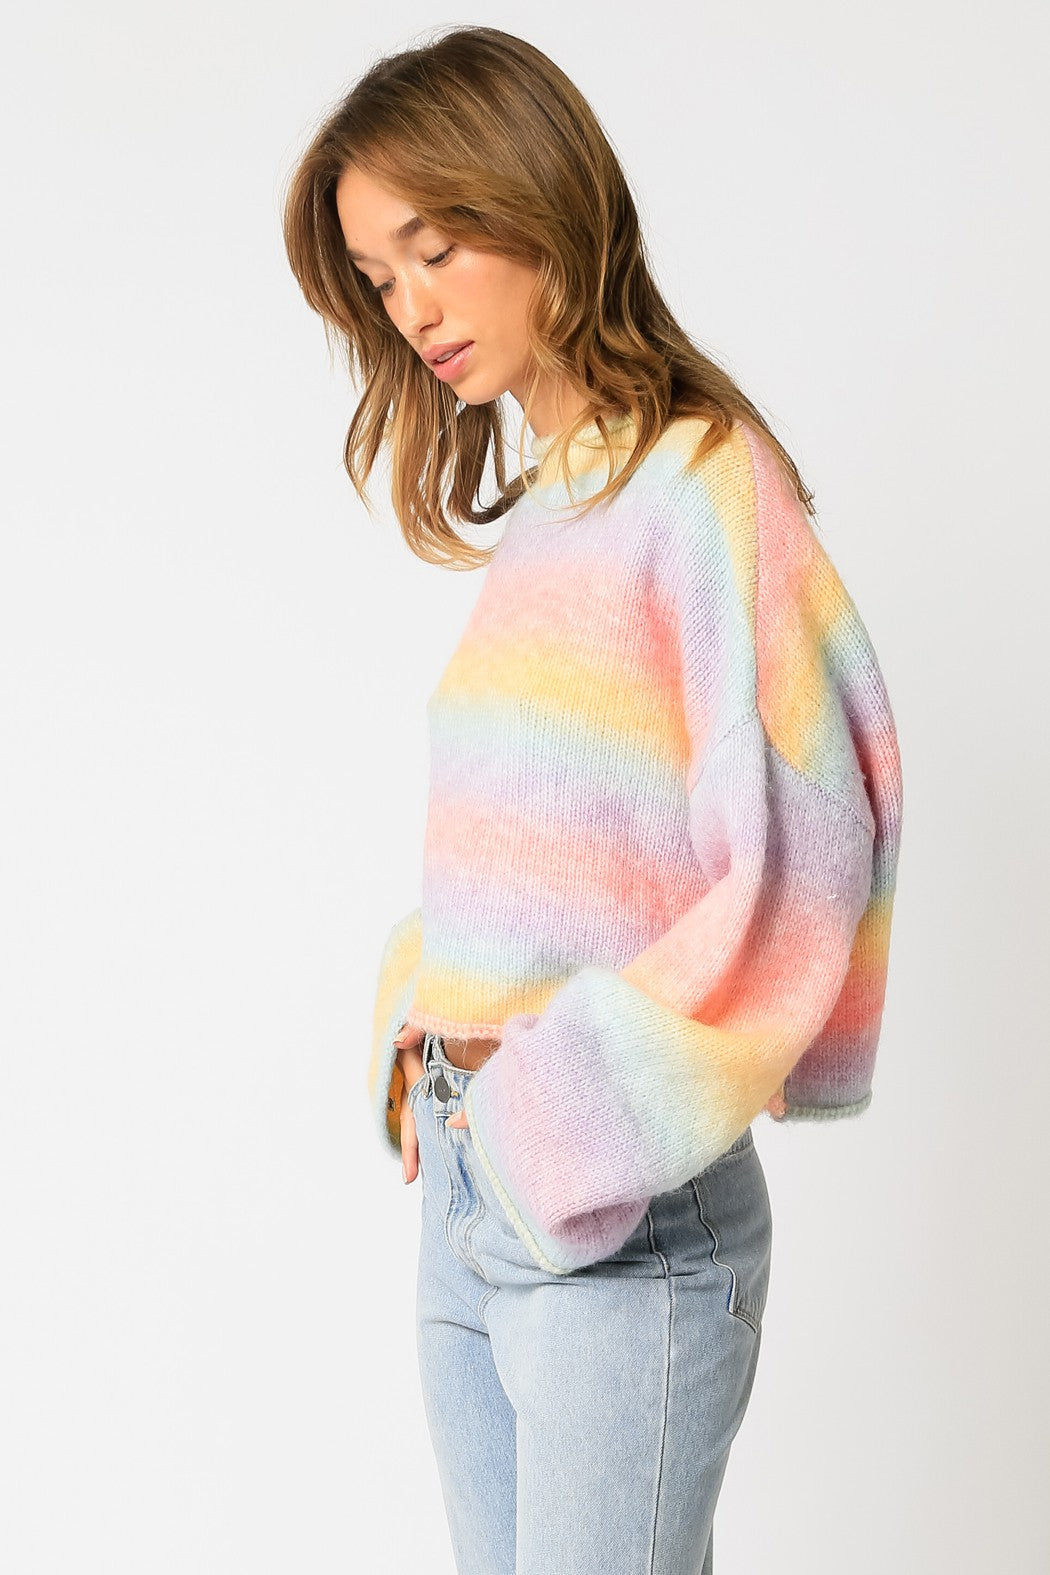 Over the Rainbow Sweater